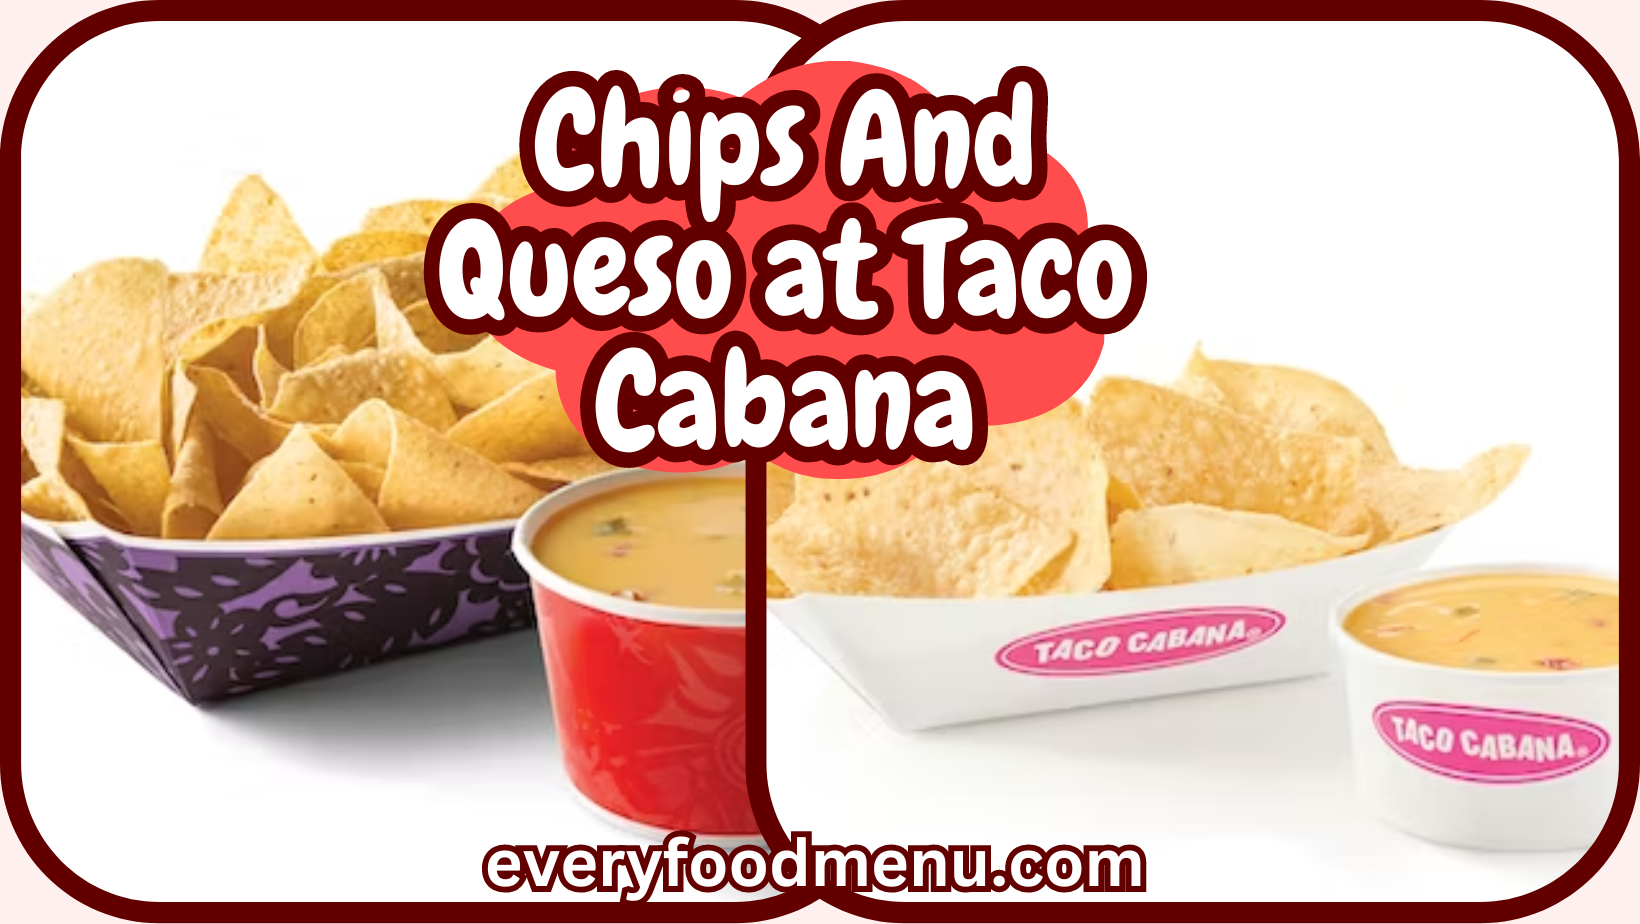 Chips And Queso at Taco Cabana